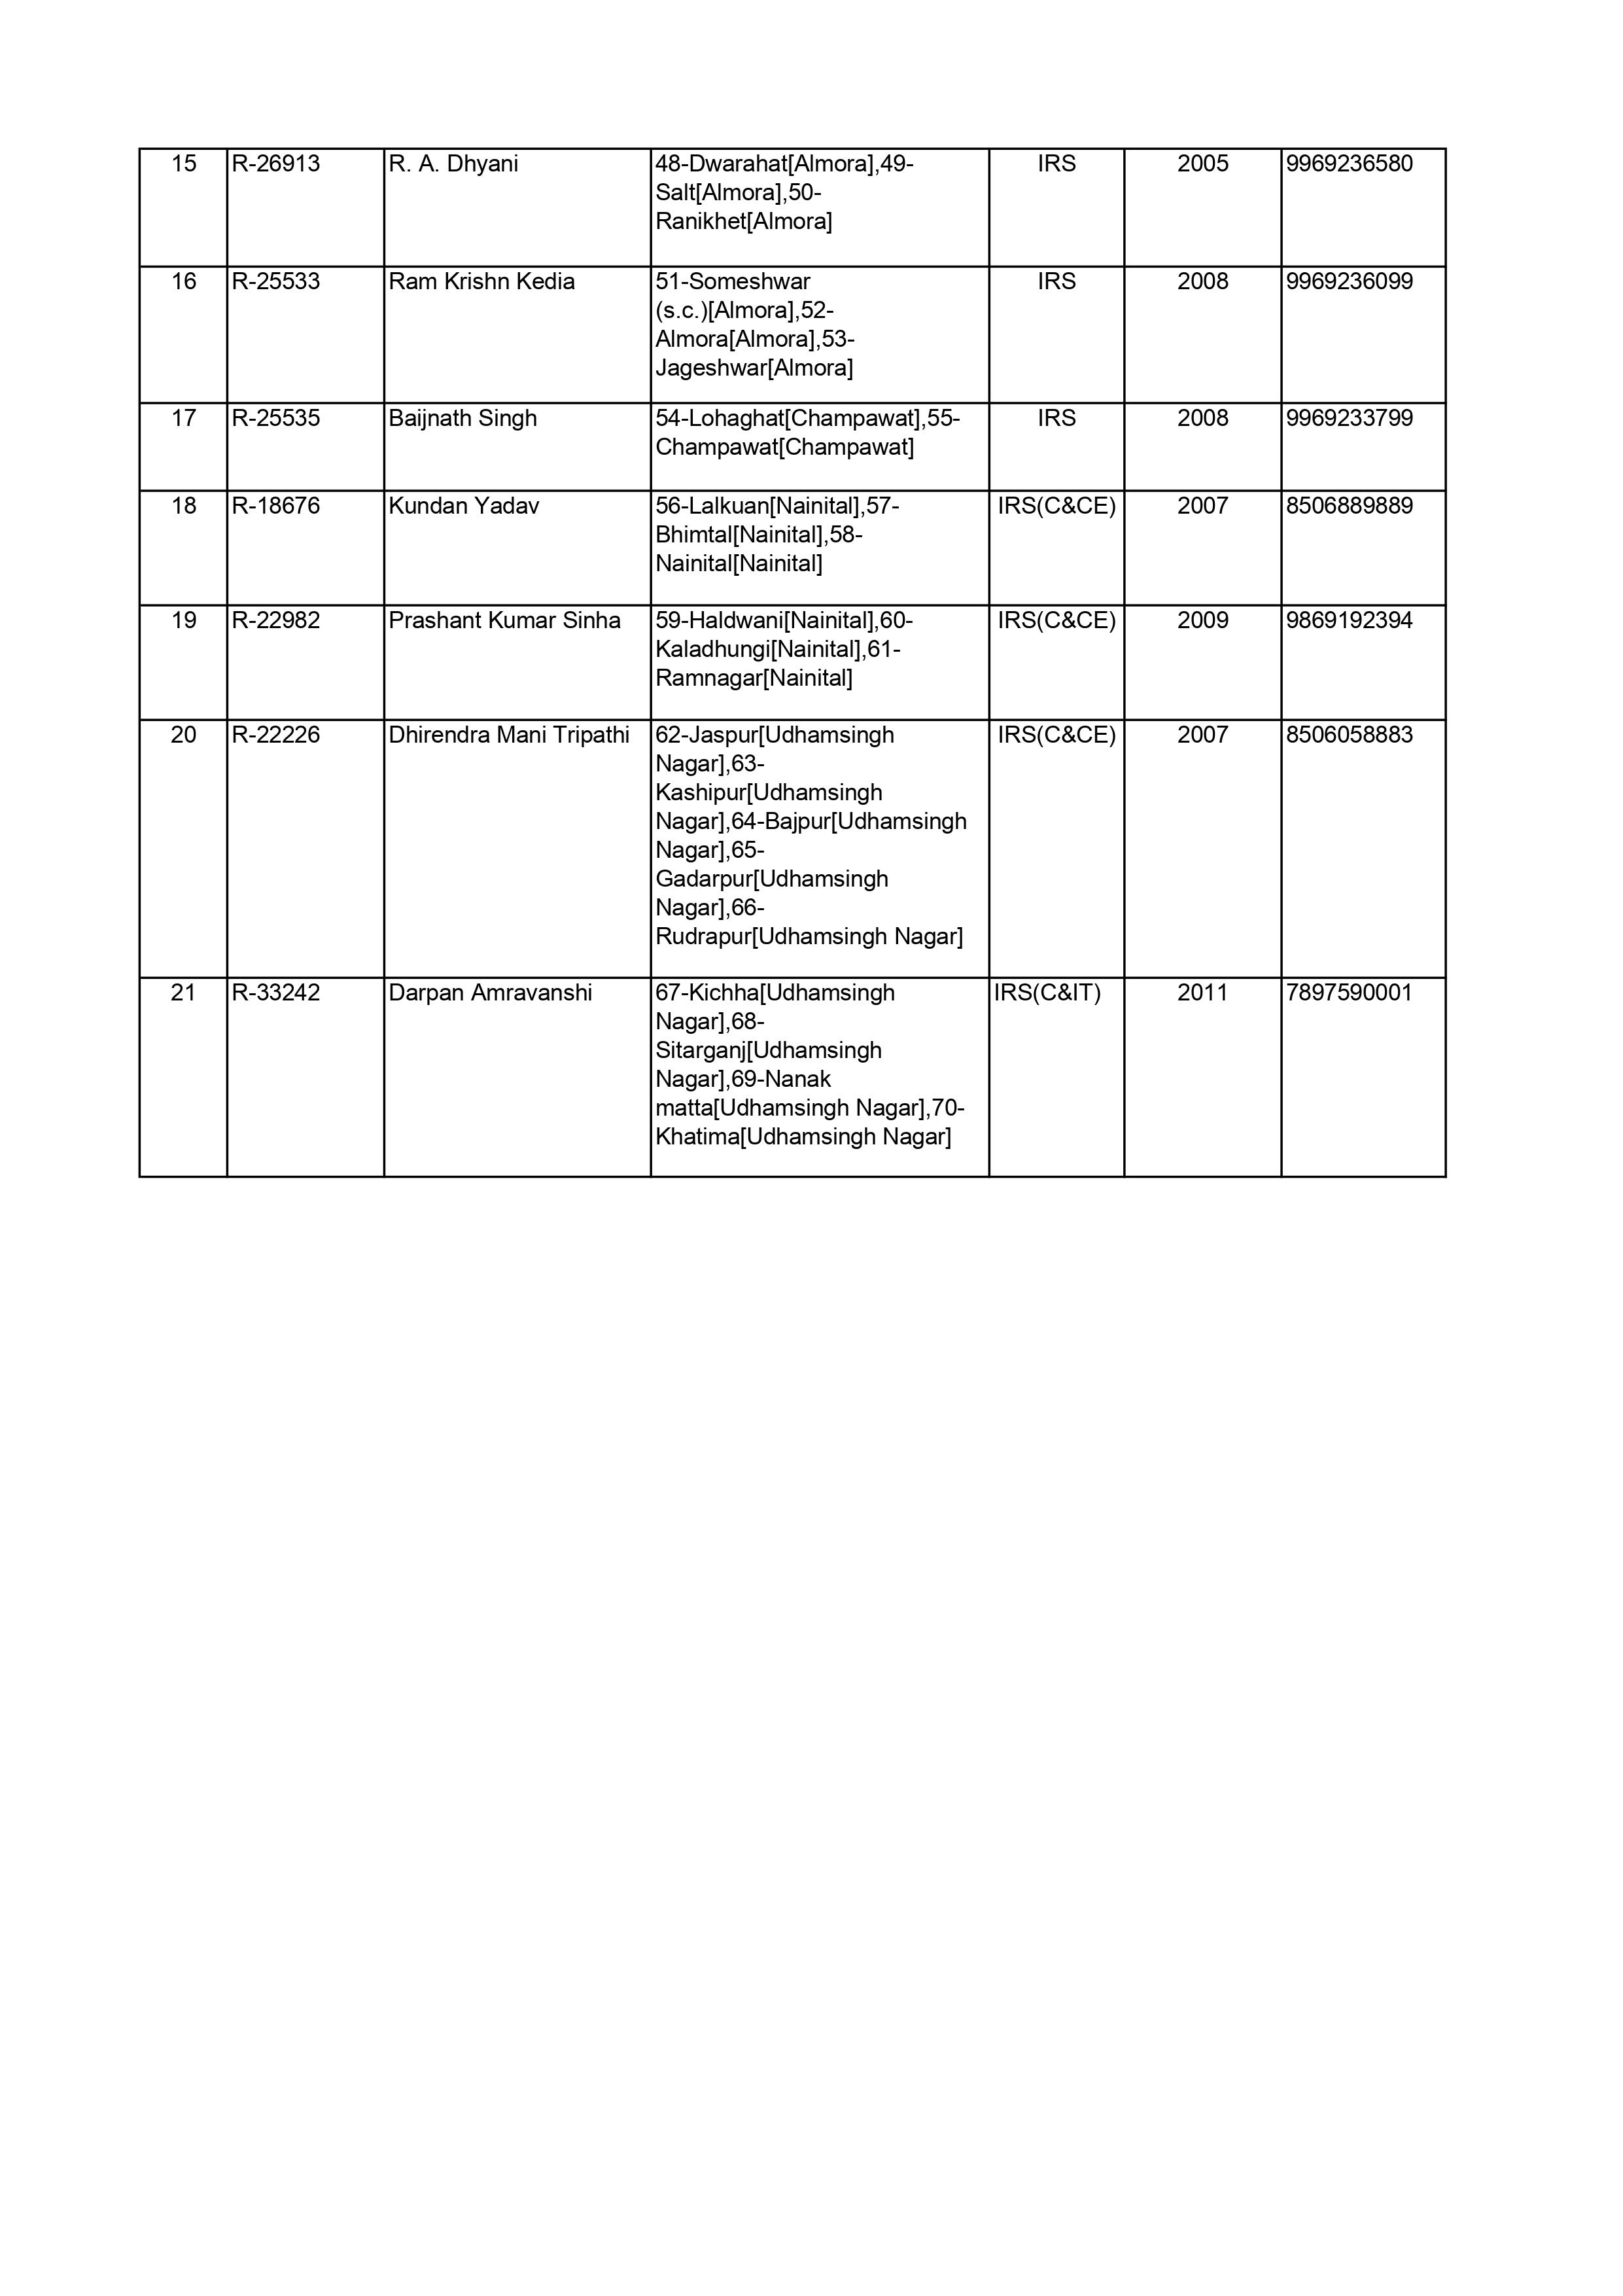 List of ECI observers